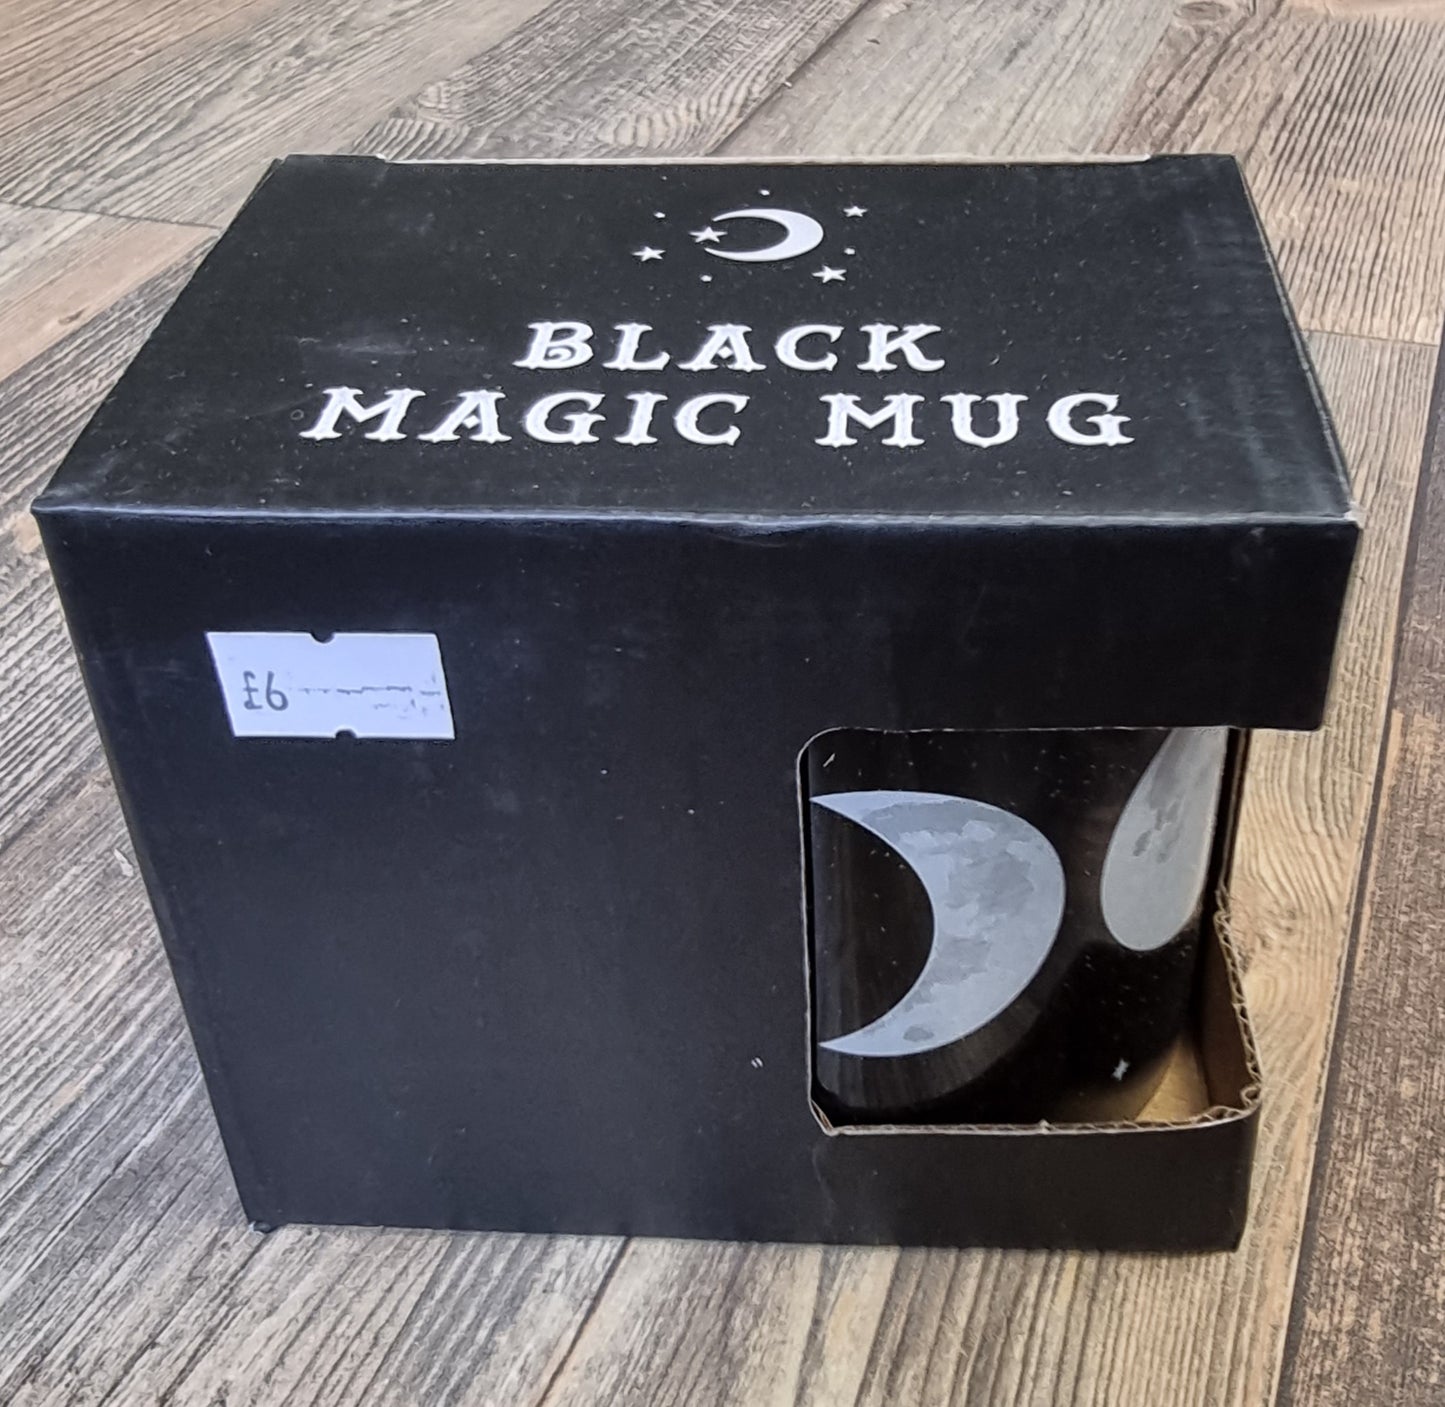 Black magic mug with moon phases